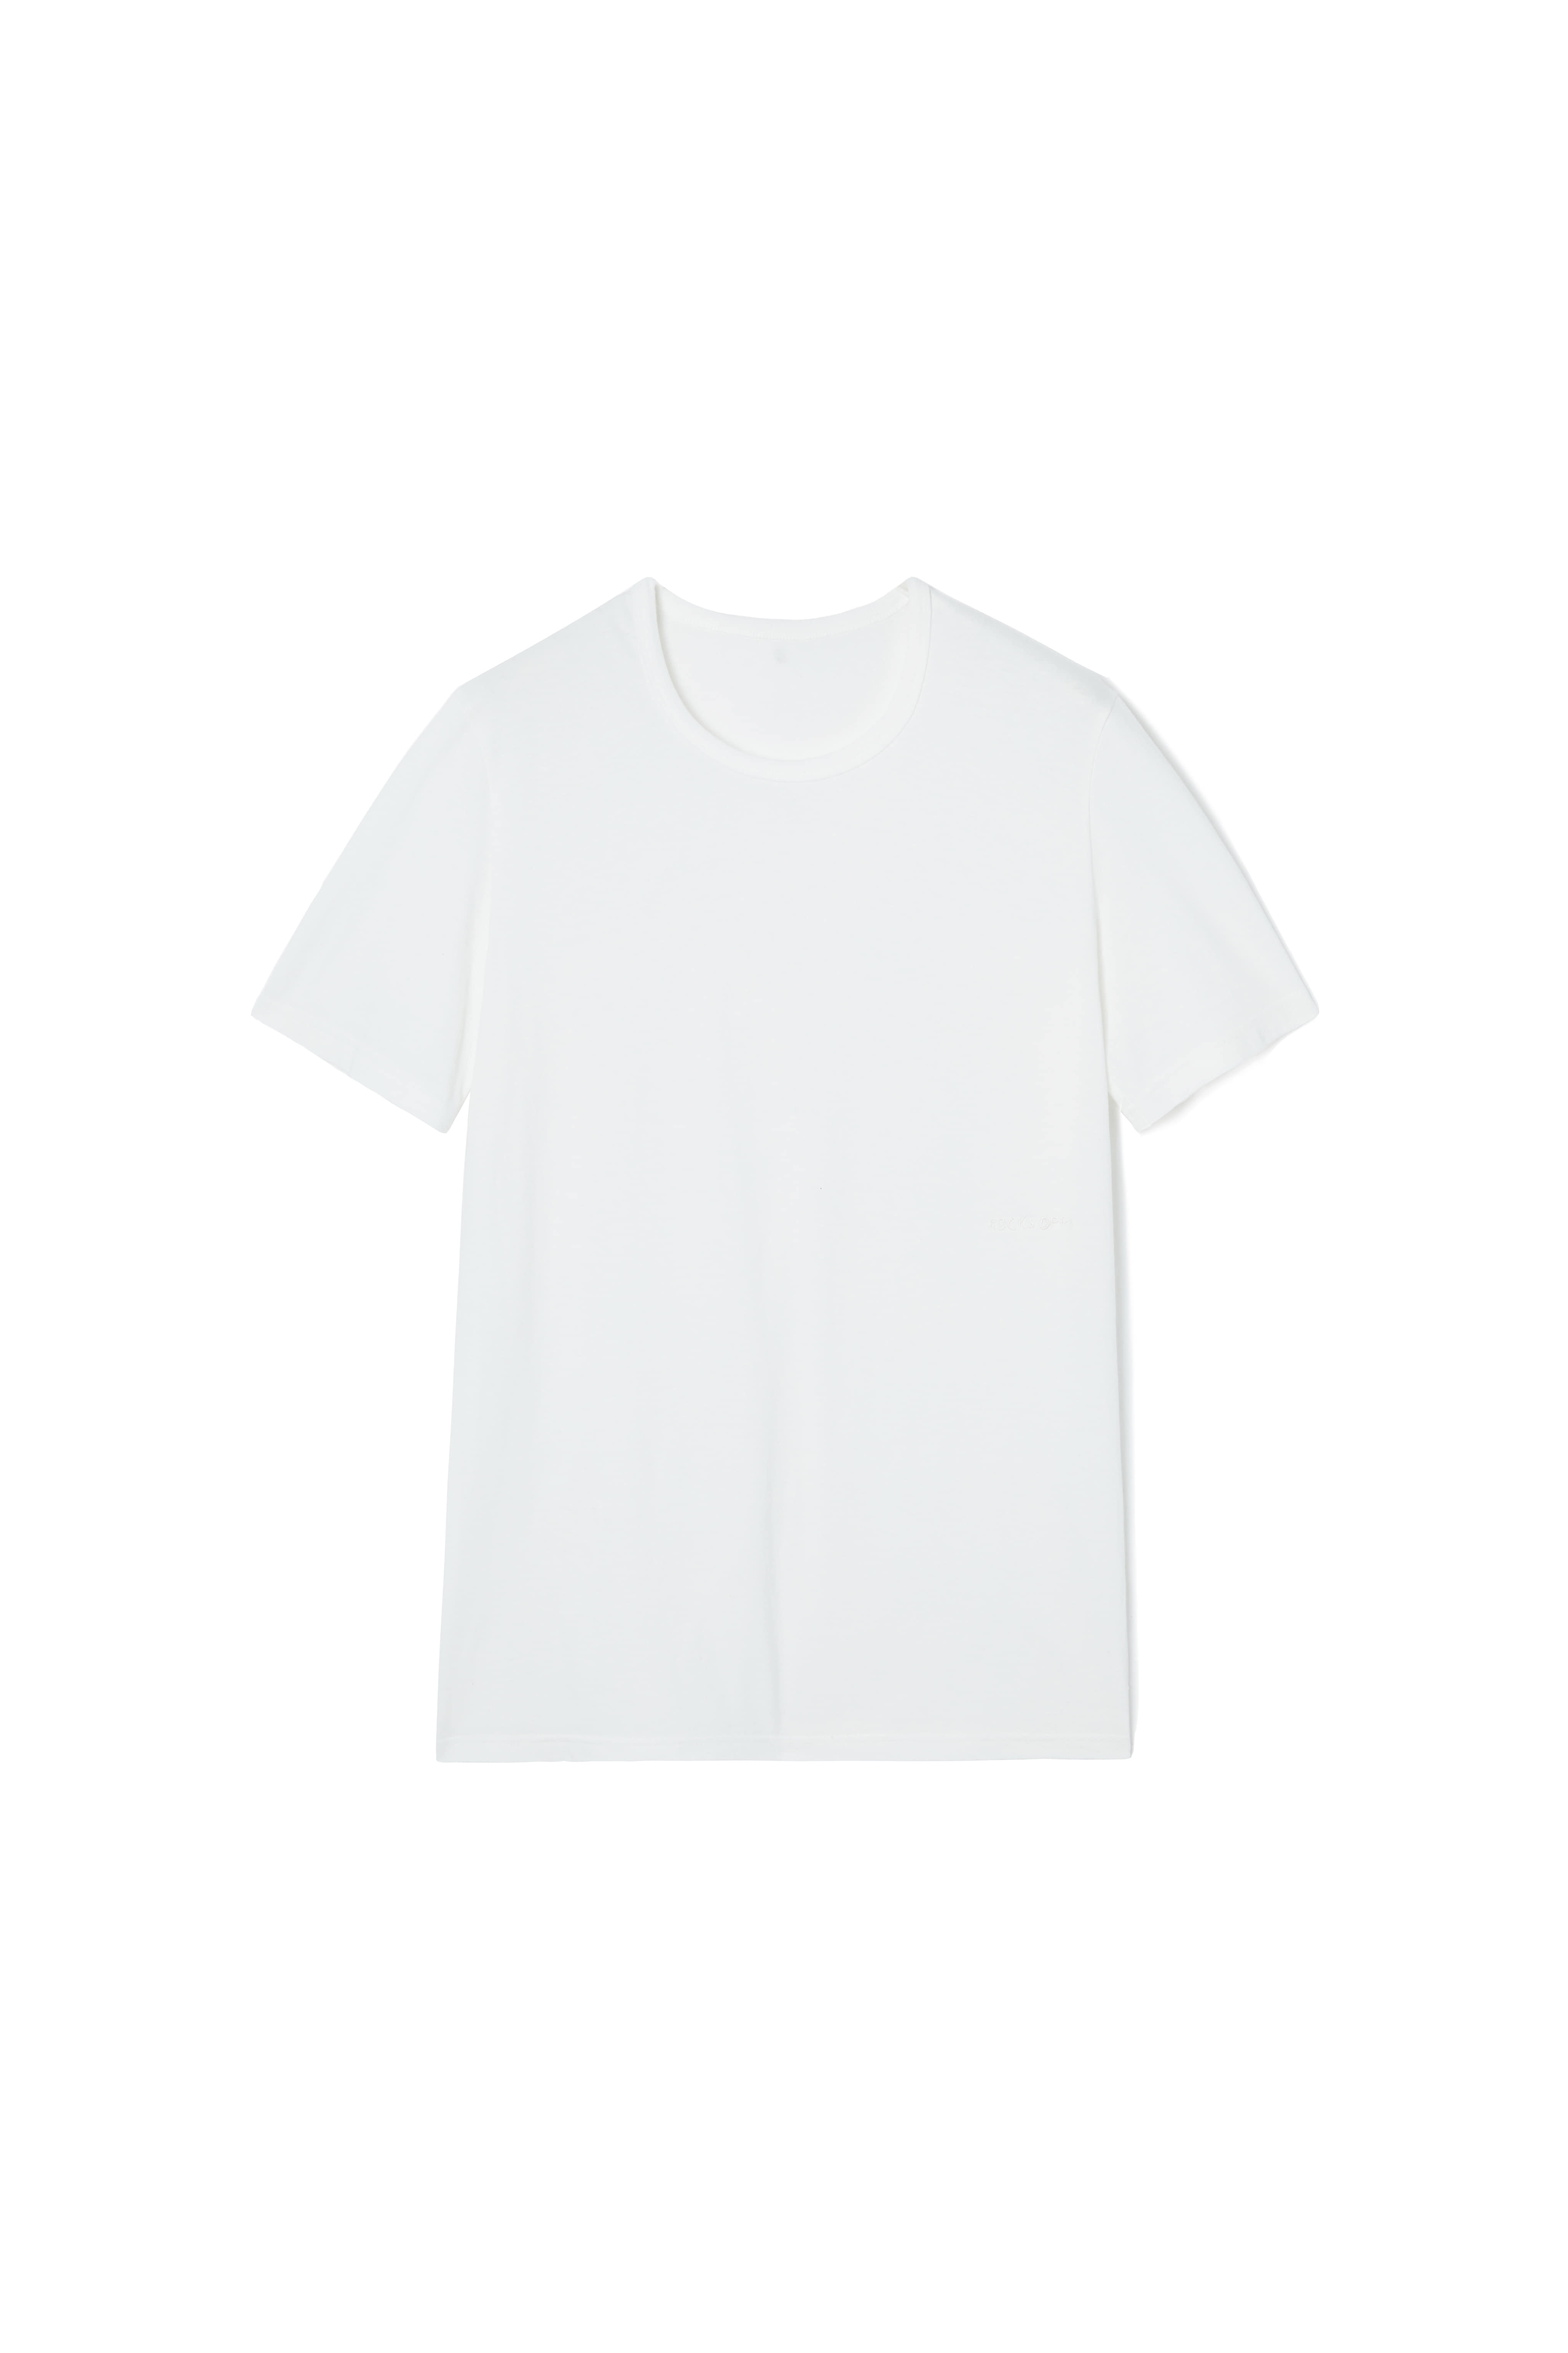 CIRCUSFALSE: U NECK T-SHIRTS IN WHITE